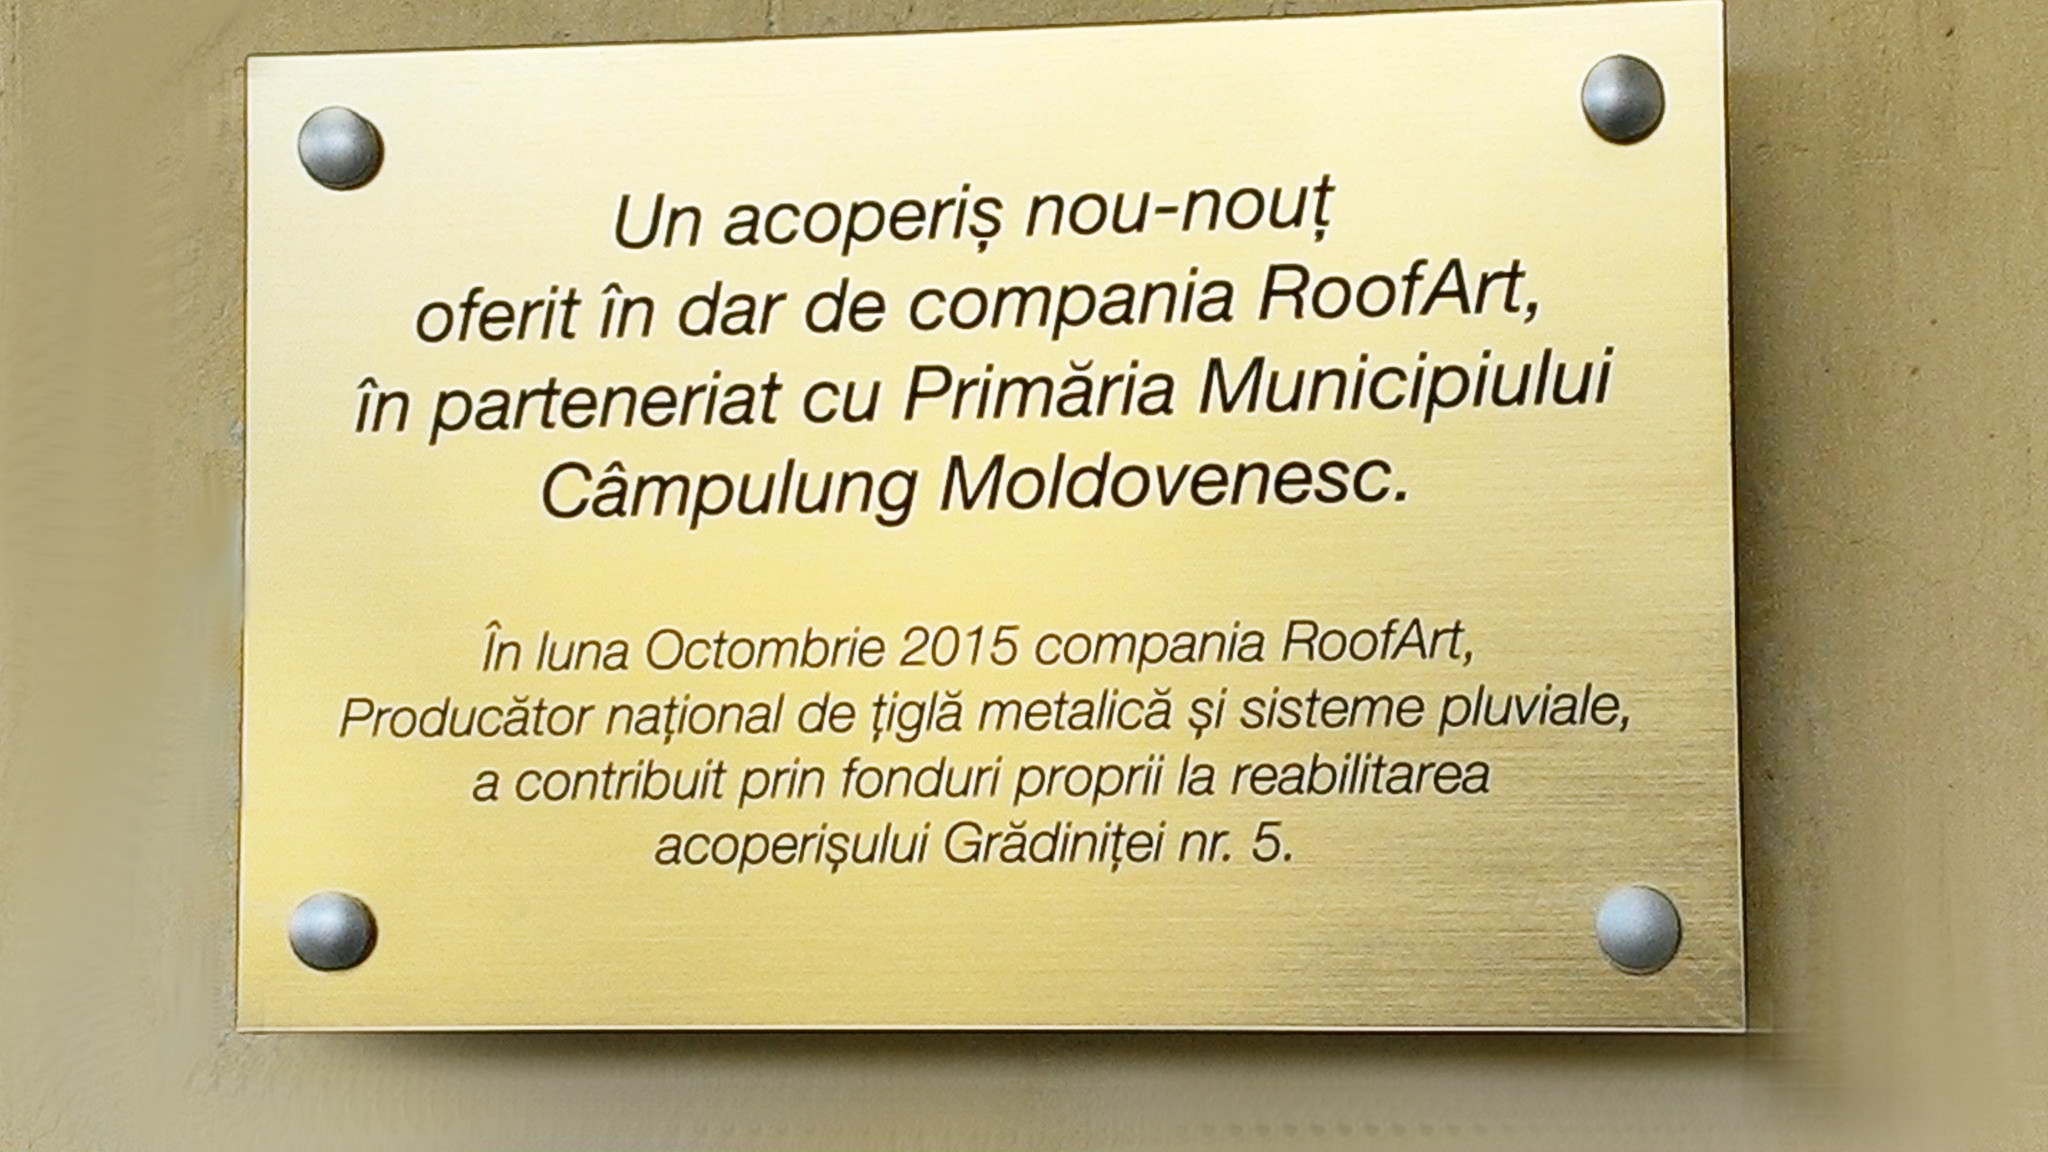 RoofArt promisiune onorata un acoperis in dar la o gradinita din Campulung Moldovenesc - RoofArt promisiune